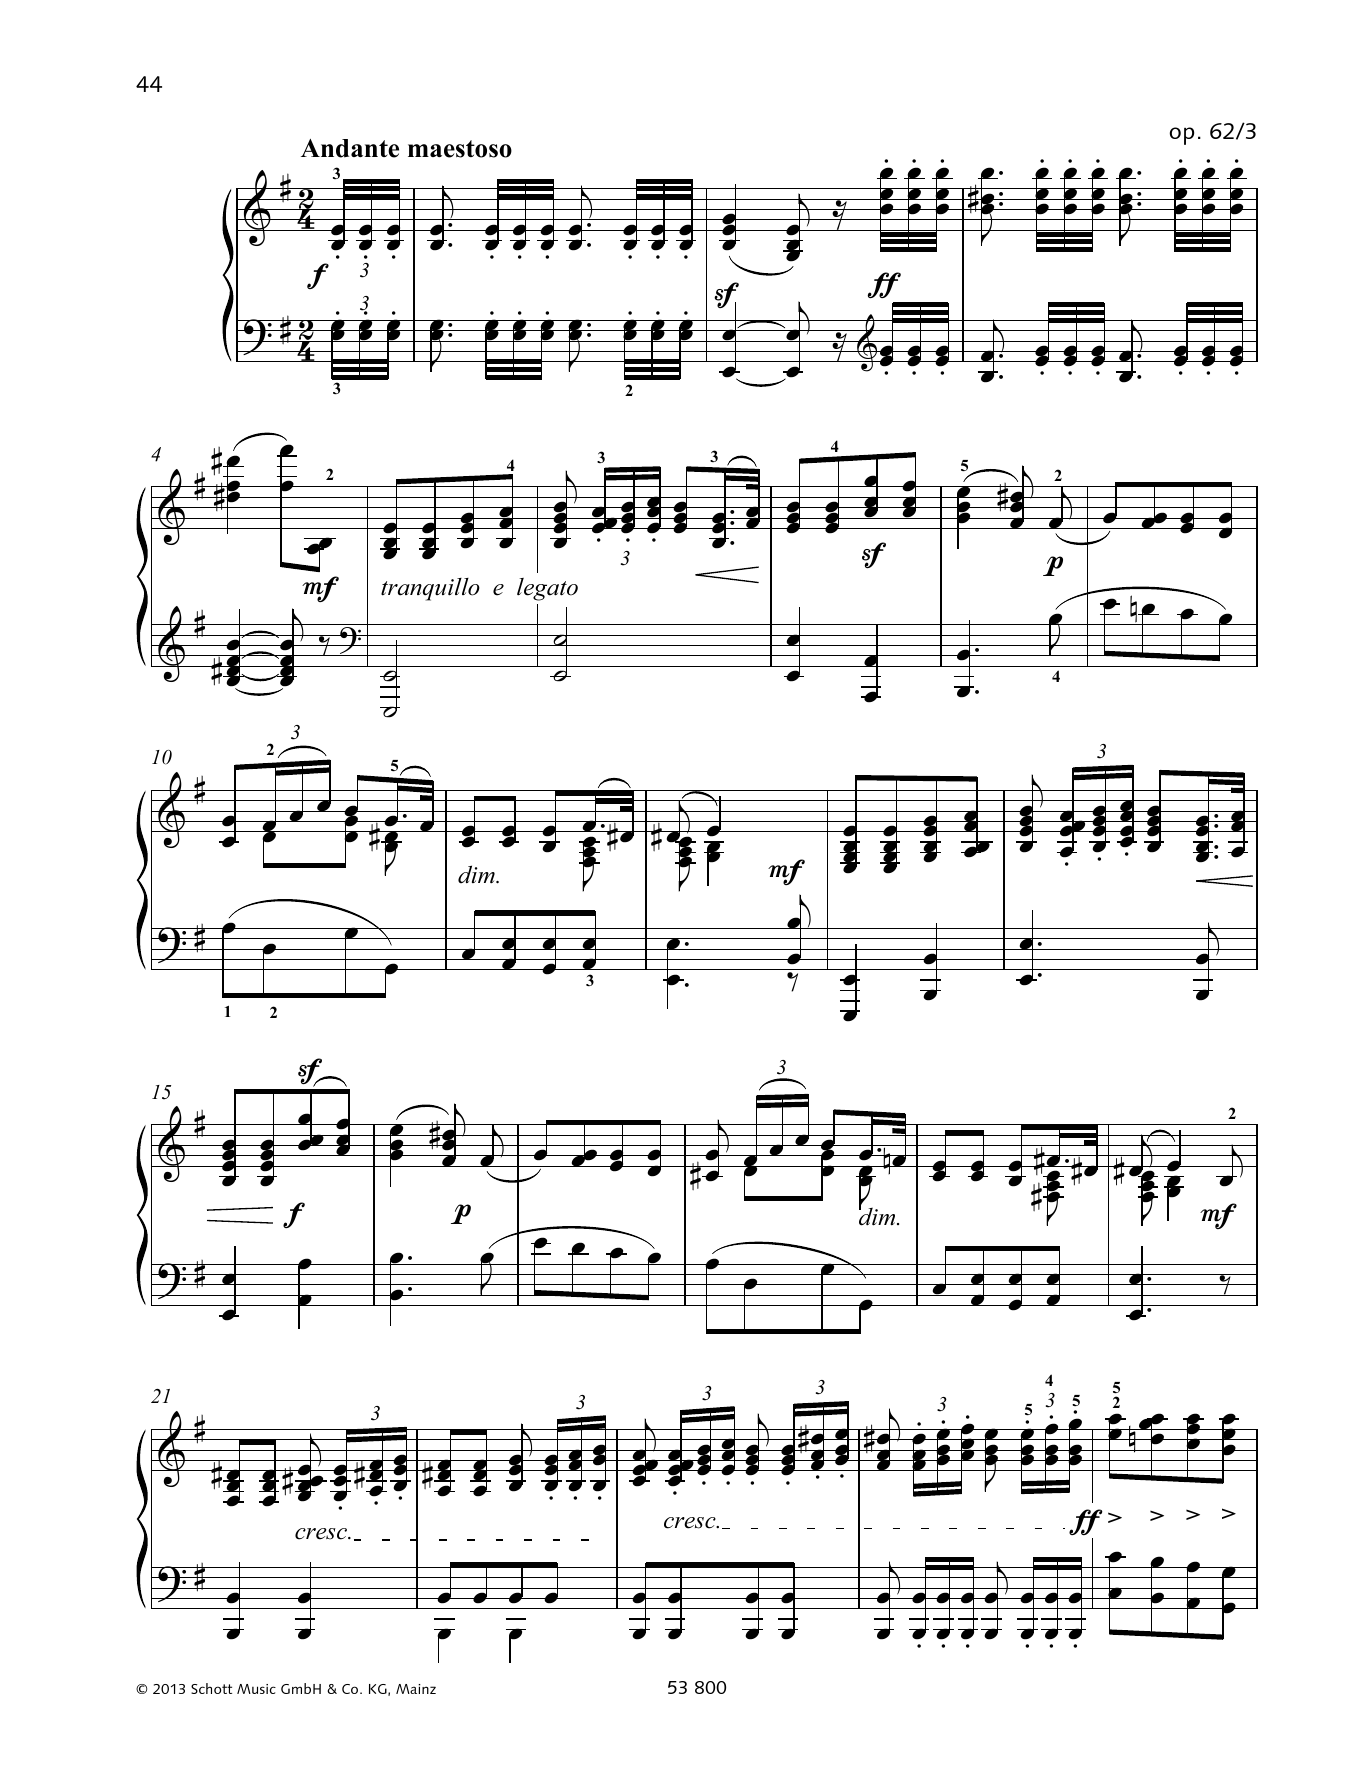 Download Felix Mendelssohn Bartholdy Andante maestoso Sheet Music